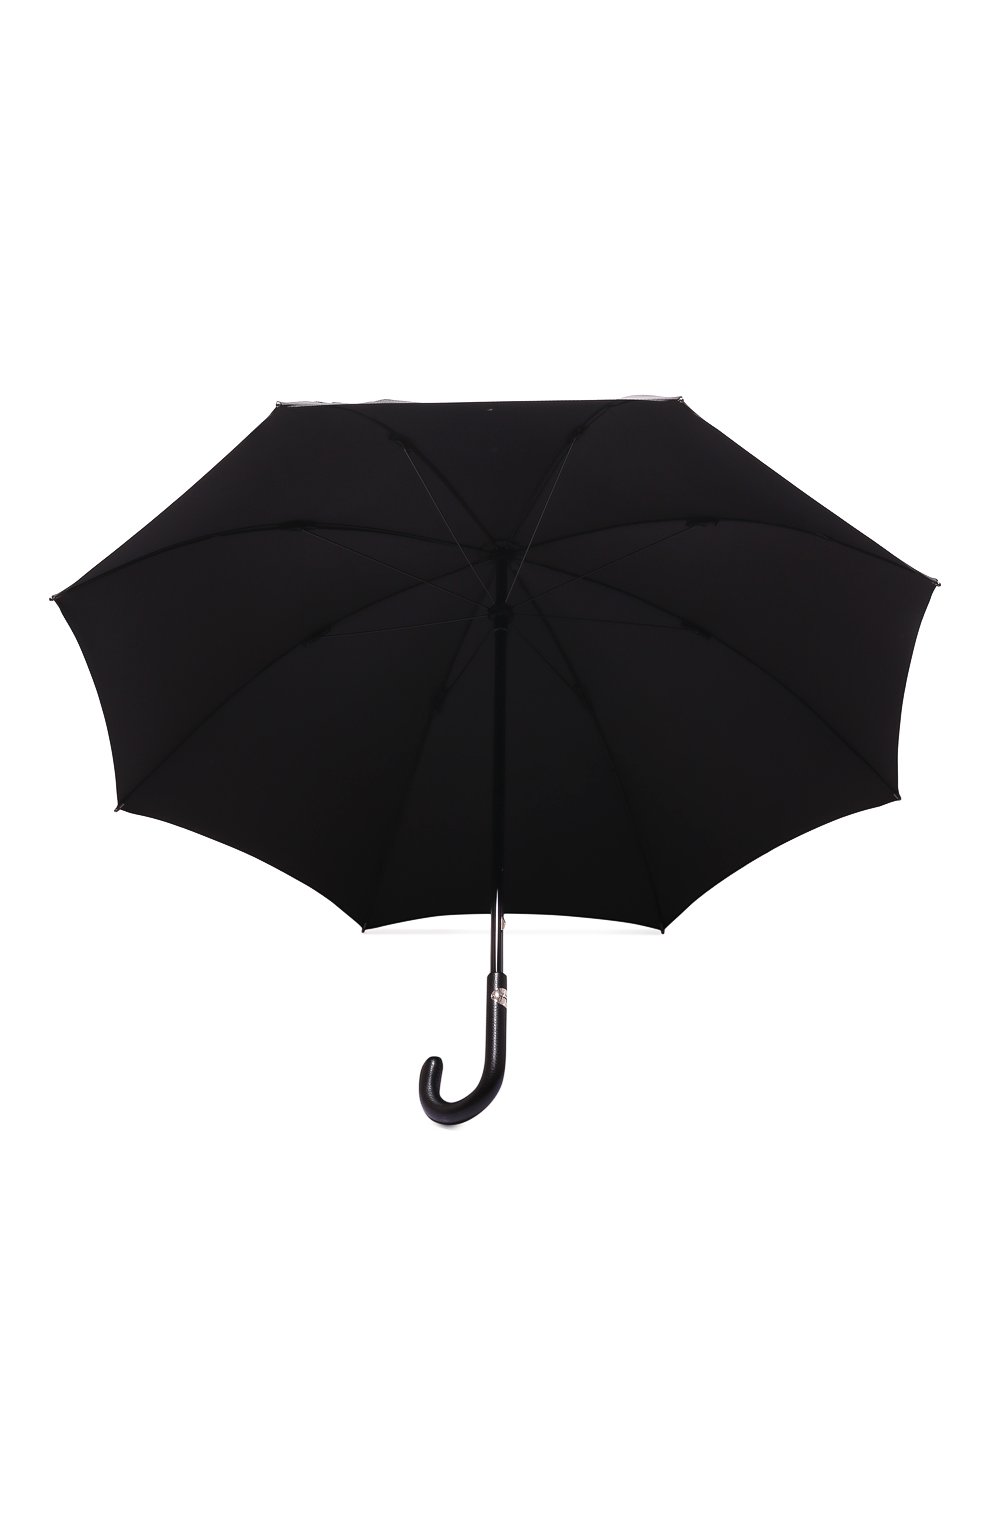 Мужской зонт-трость PASOTTI OMBRELLI темно-серого цвета, арт. 0MITU0 145/MINICHEVR0N/1 | Фото 3 (Материал: Текстиль, Синтетический материал, Металл)